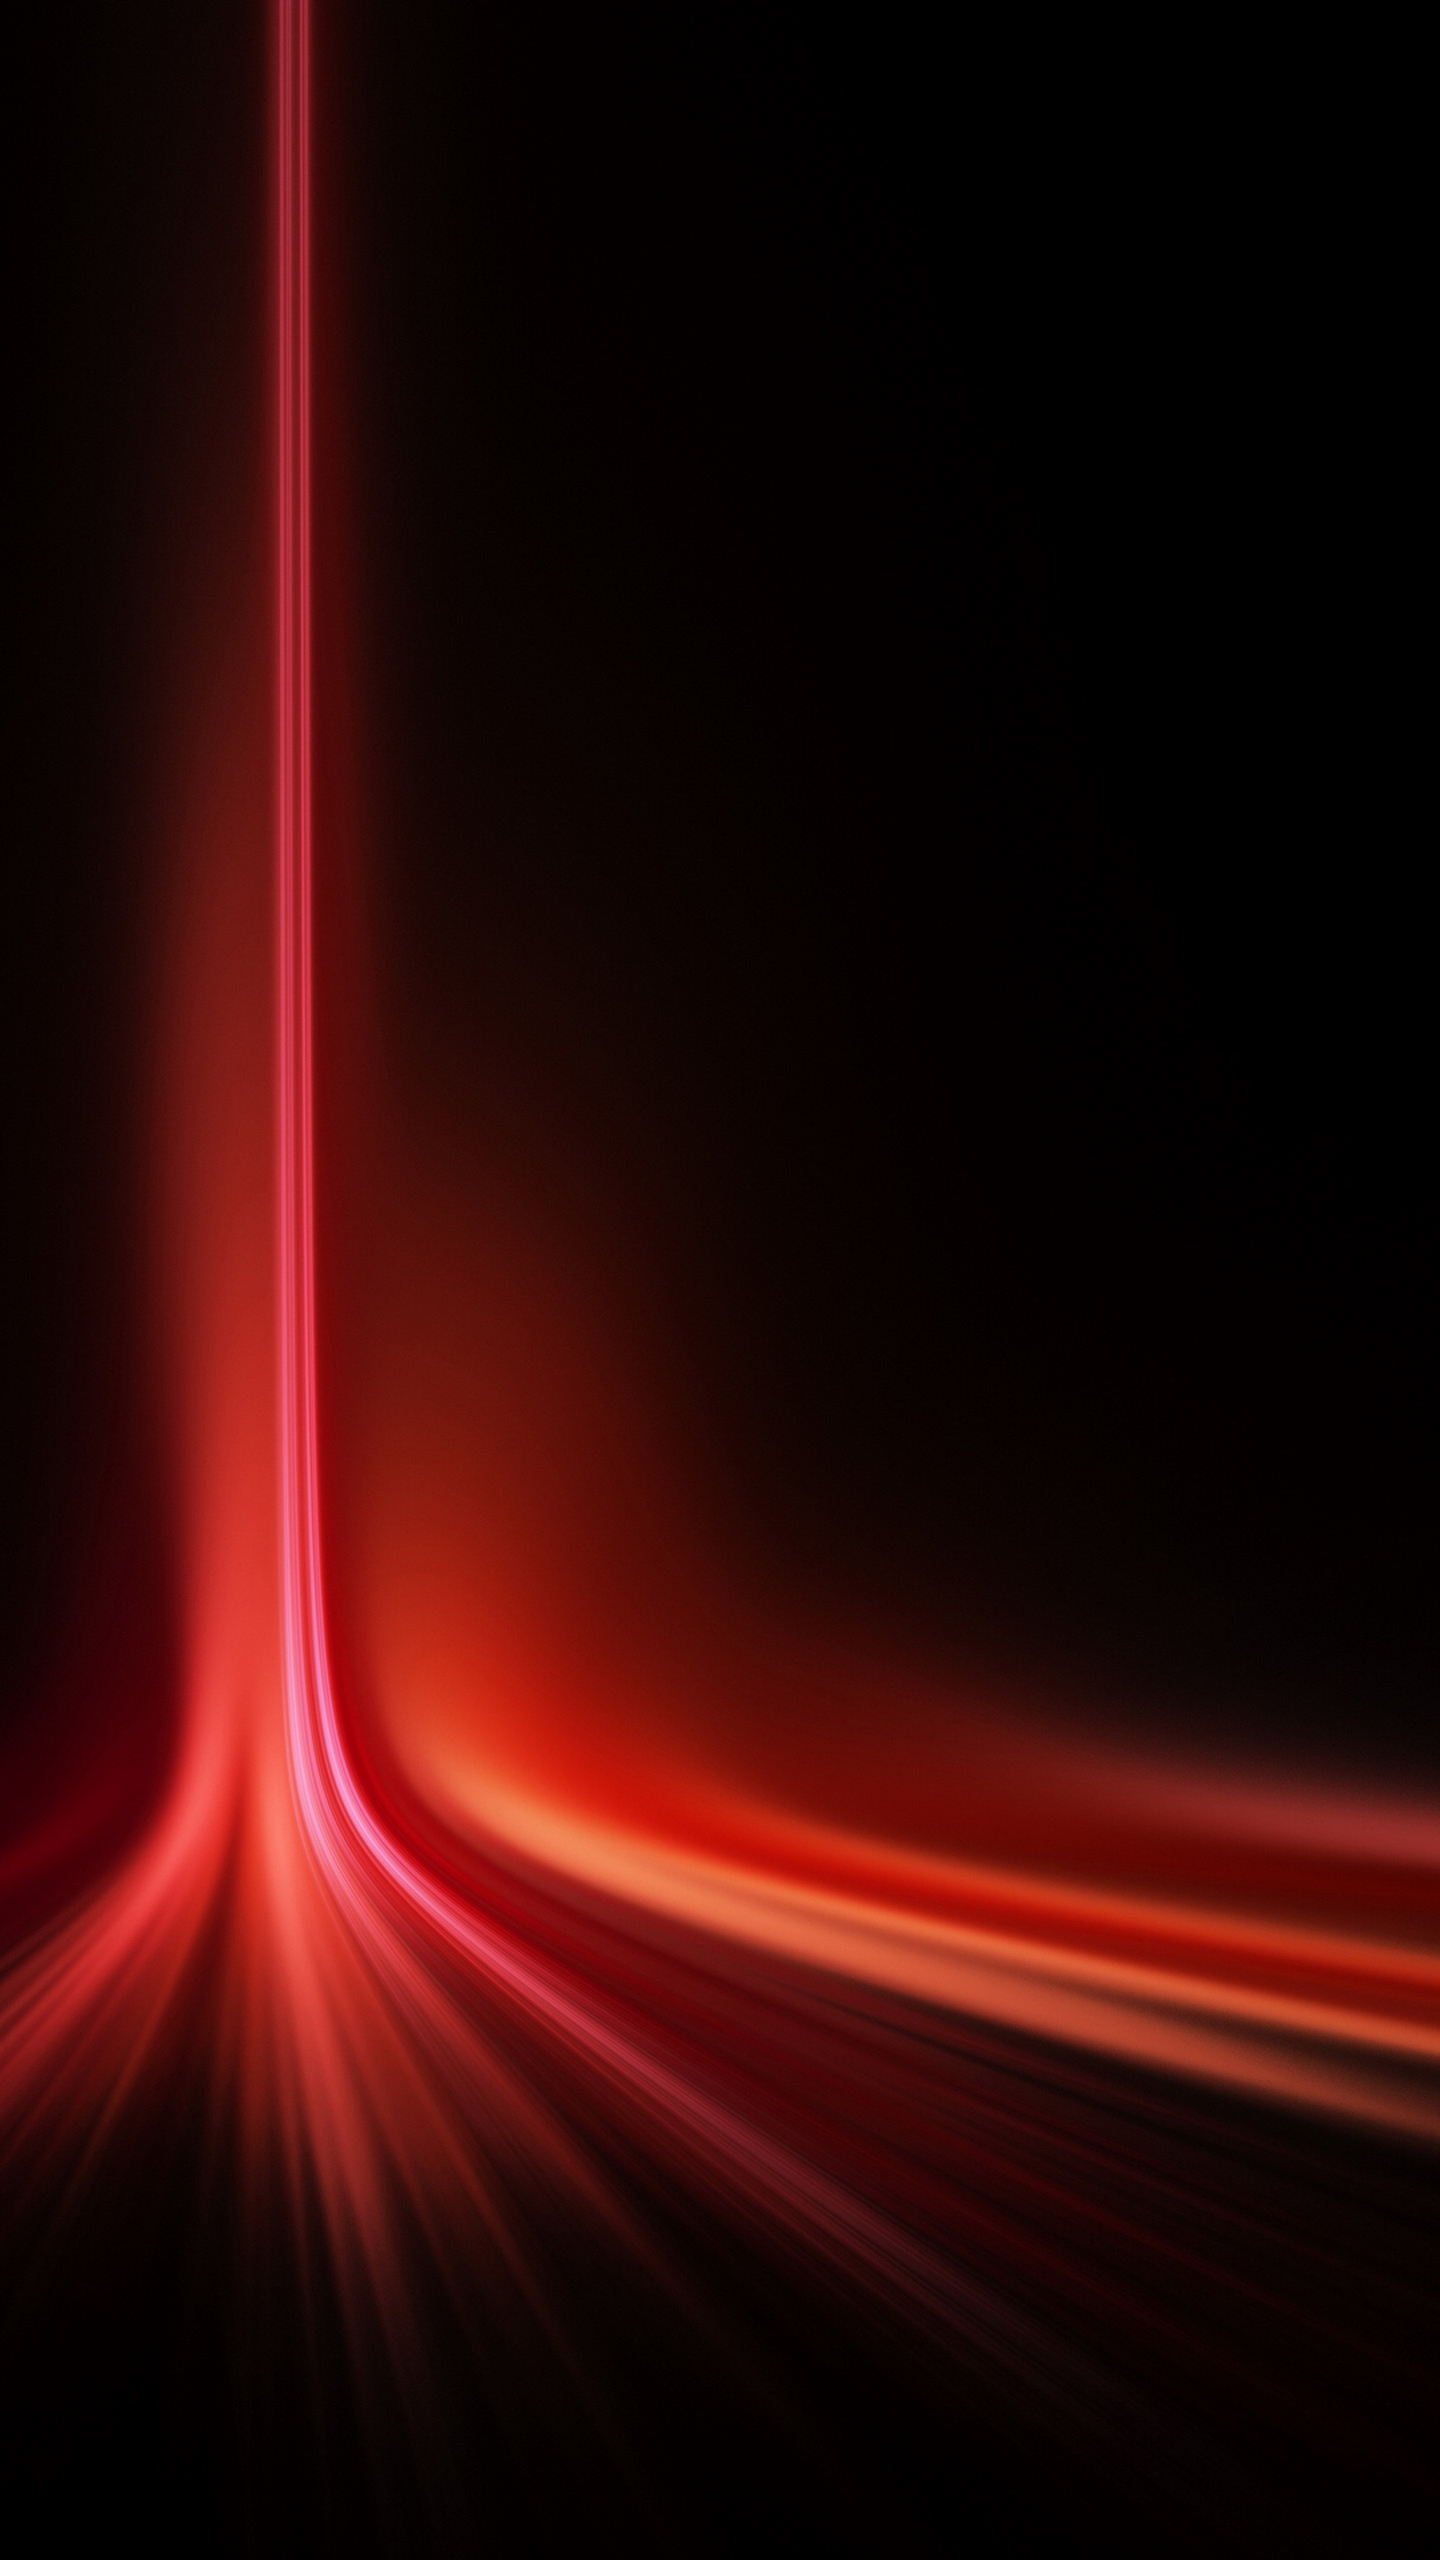 Vertical Red Laser Light Spread Galaxy Note 4 Wallpaper Quad HD